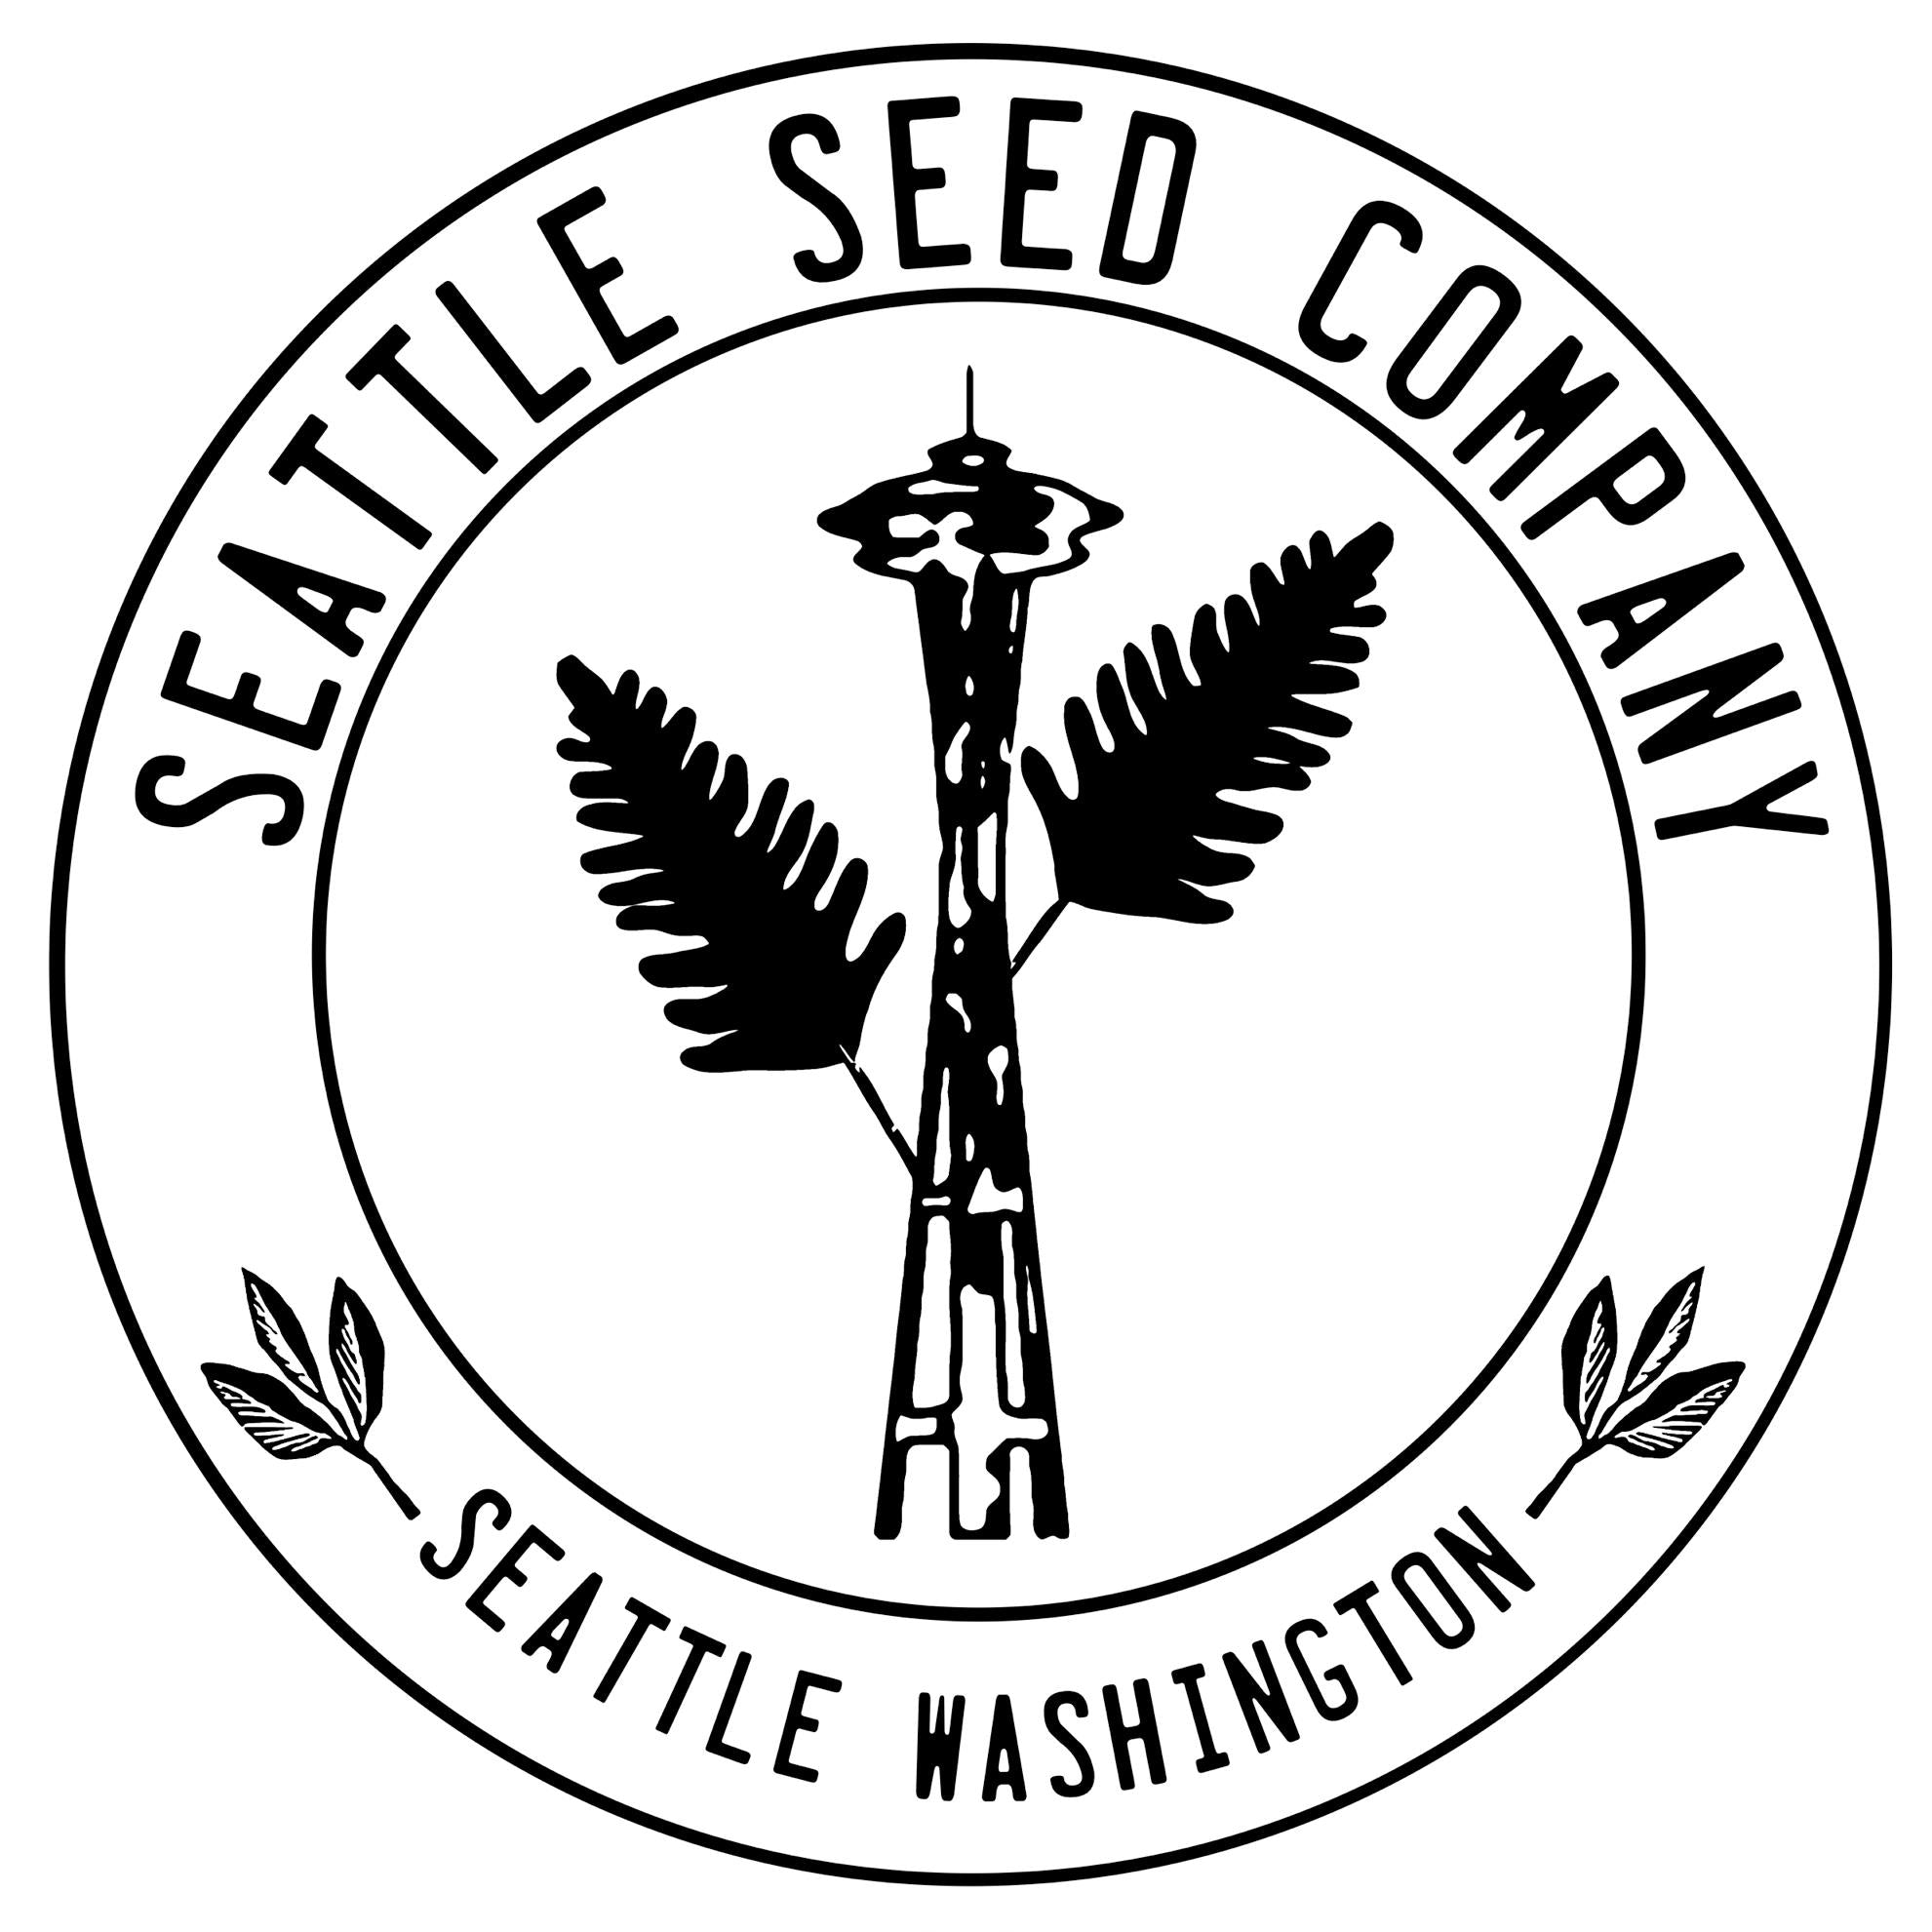 Seattle Seed Co.